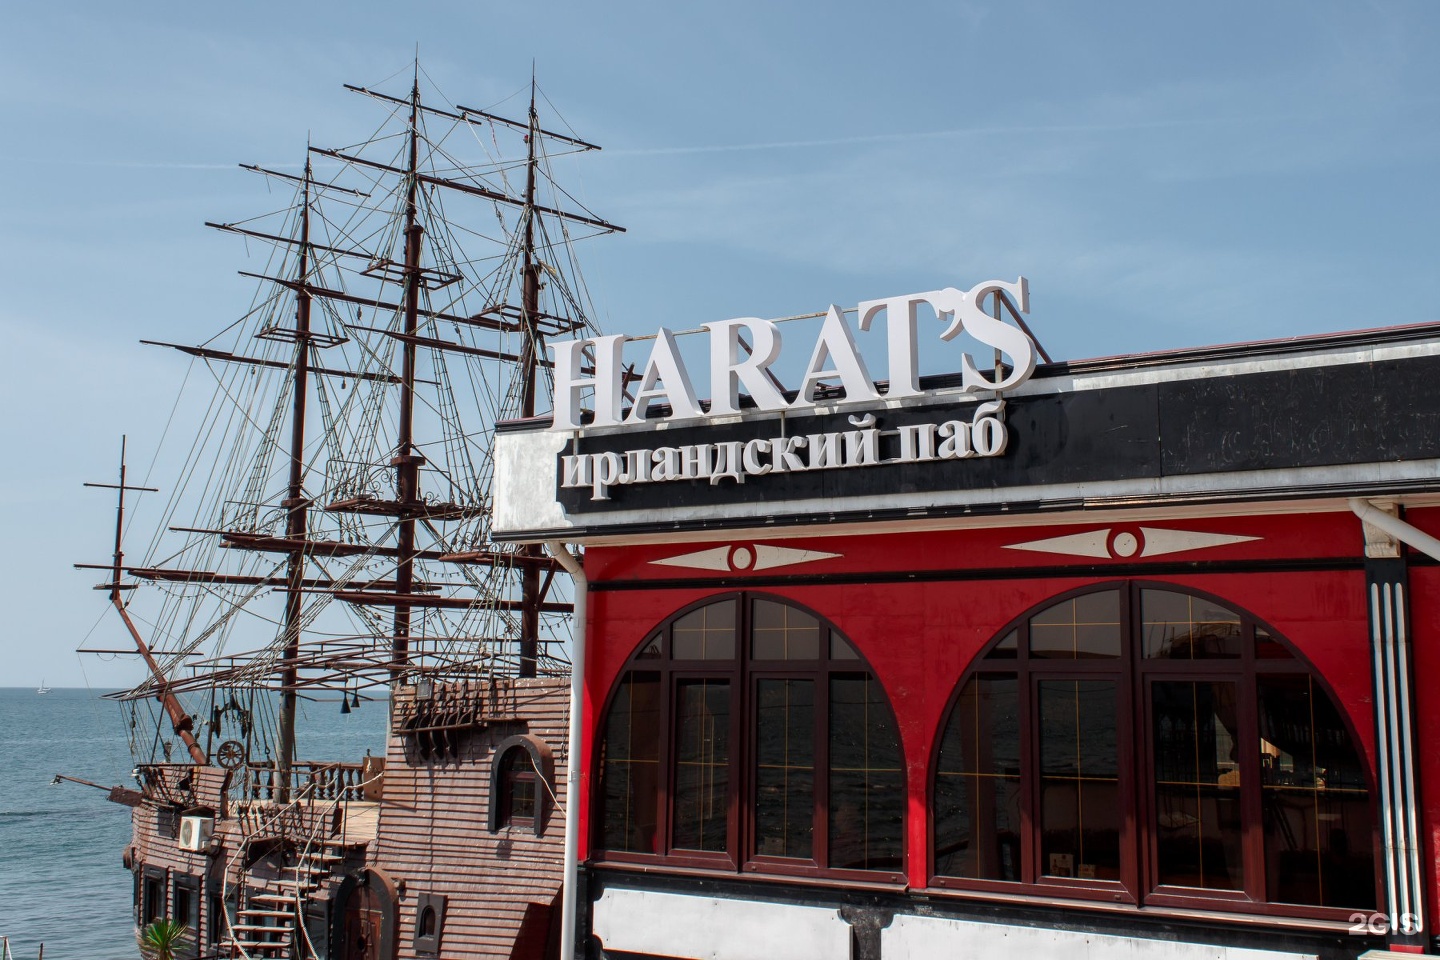 Harat's Pub Сочи